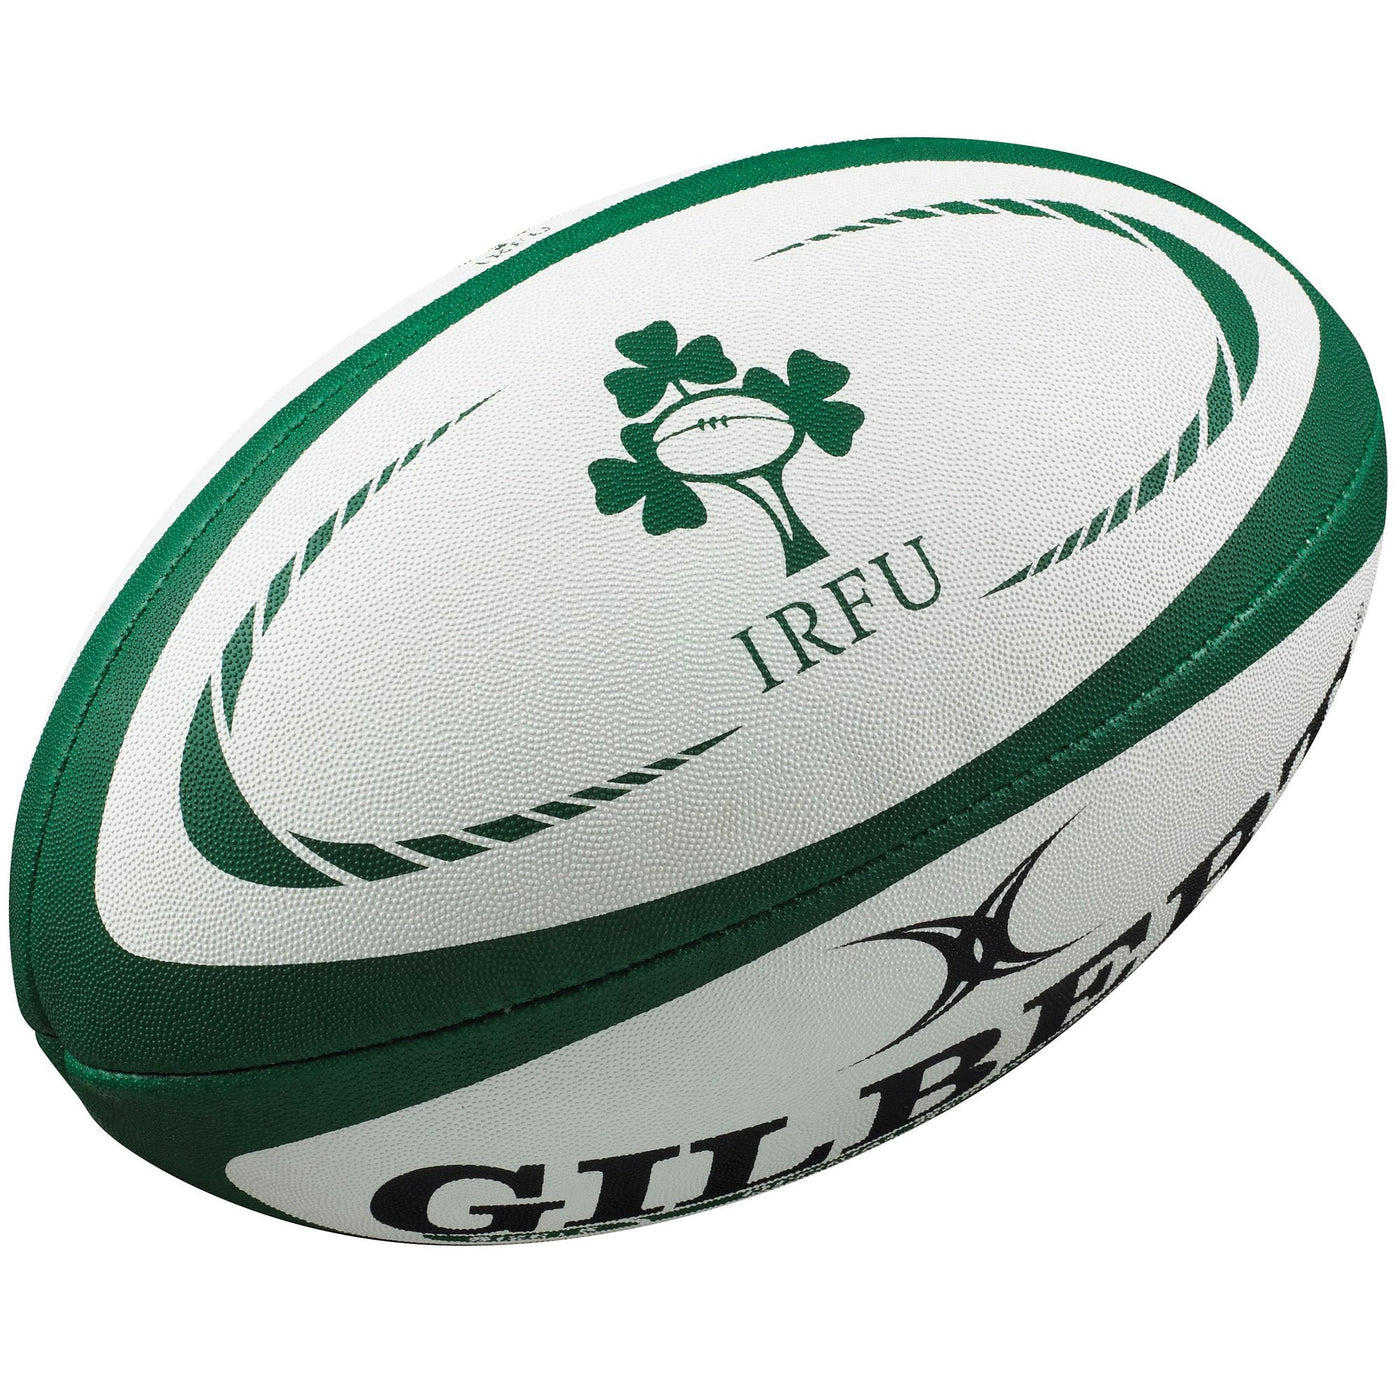 Ierland Replica Rugbybal Maat 4